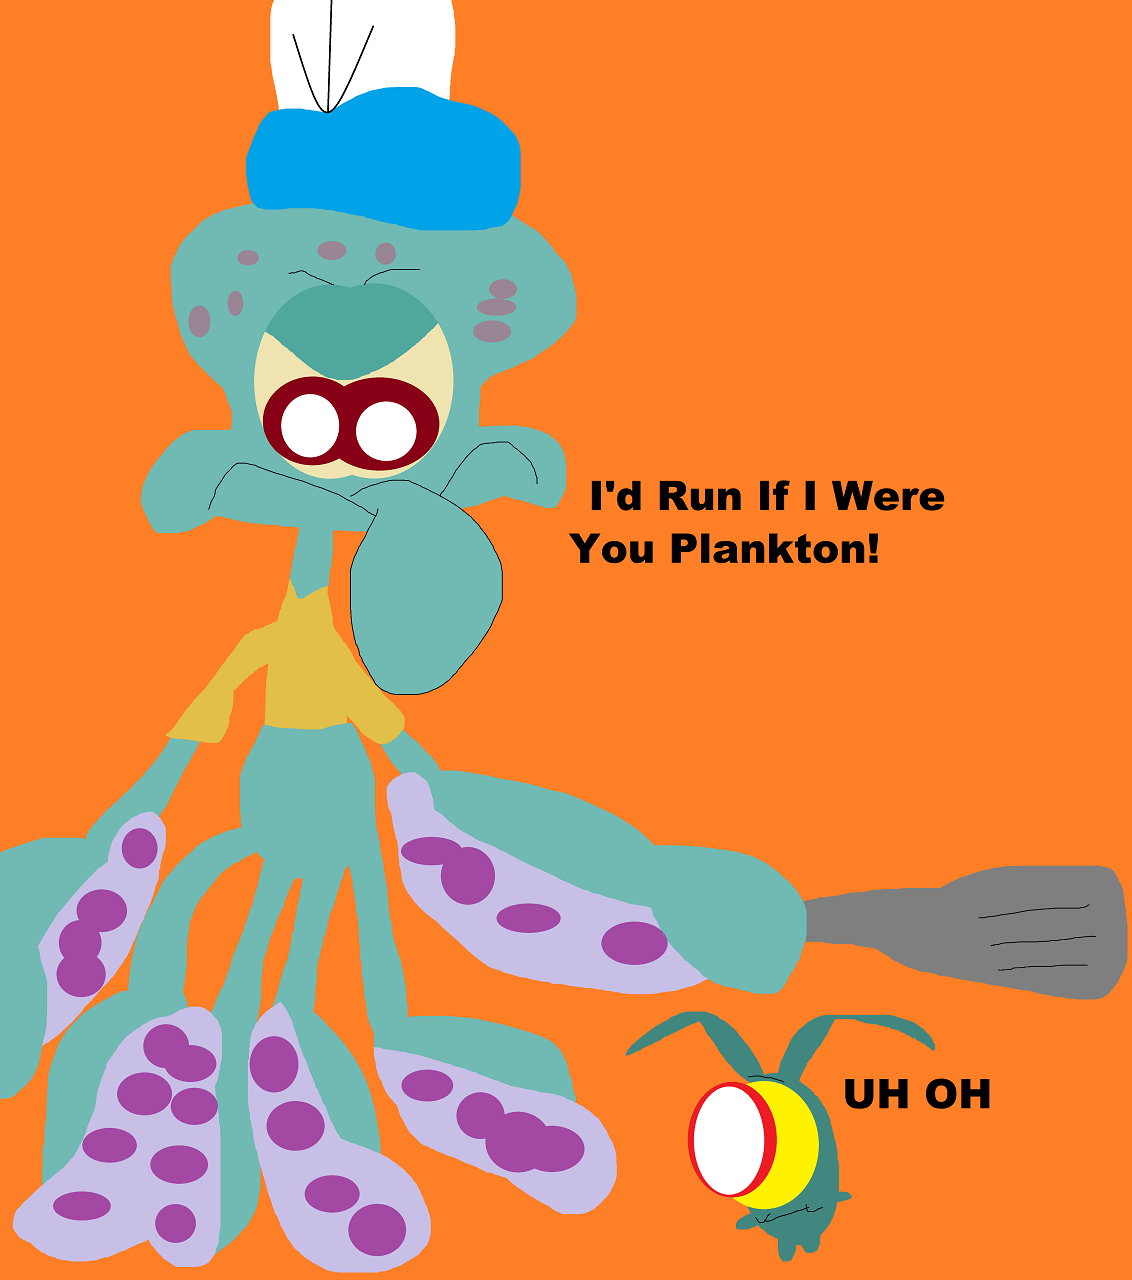 I'd Run If I Were You Plankton by Falconlobo